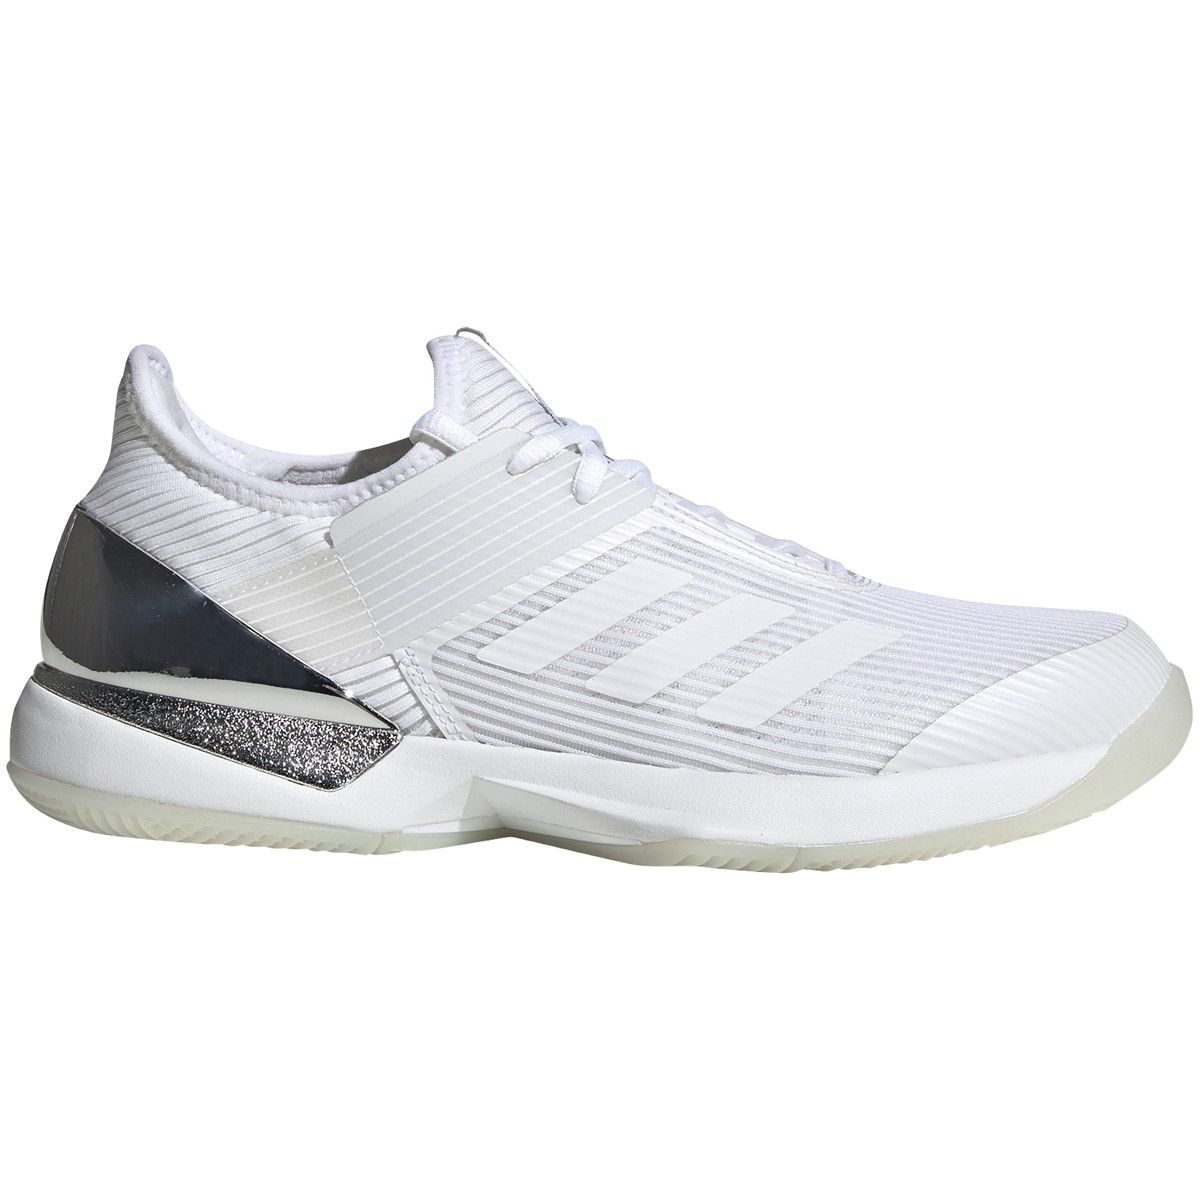 adidas Adizero Ubersonic 3.0 Women's Tennis Shoes EF2463